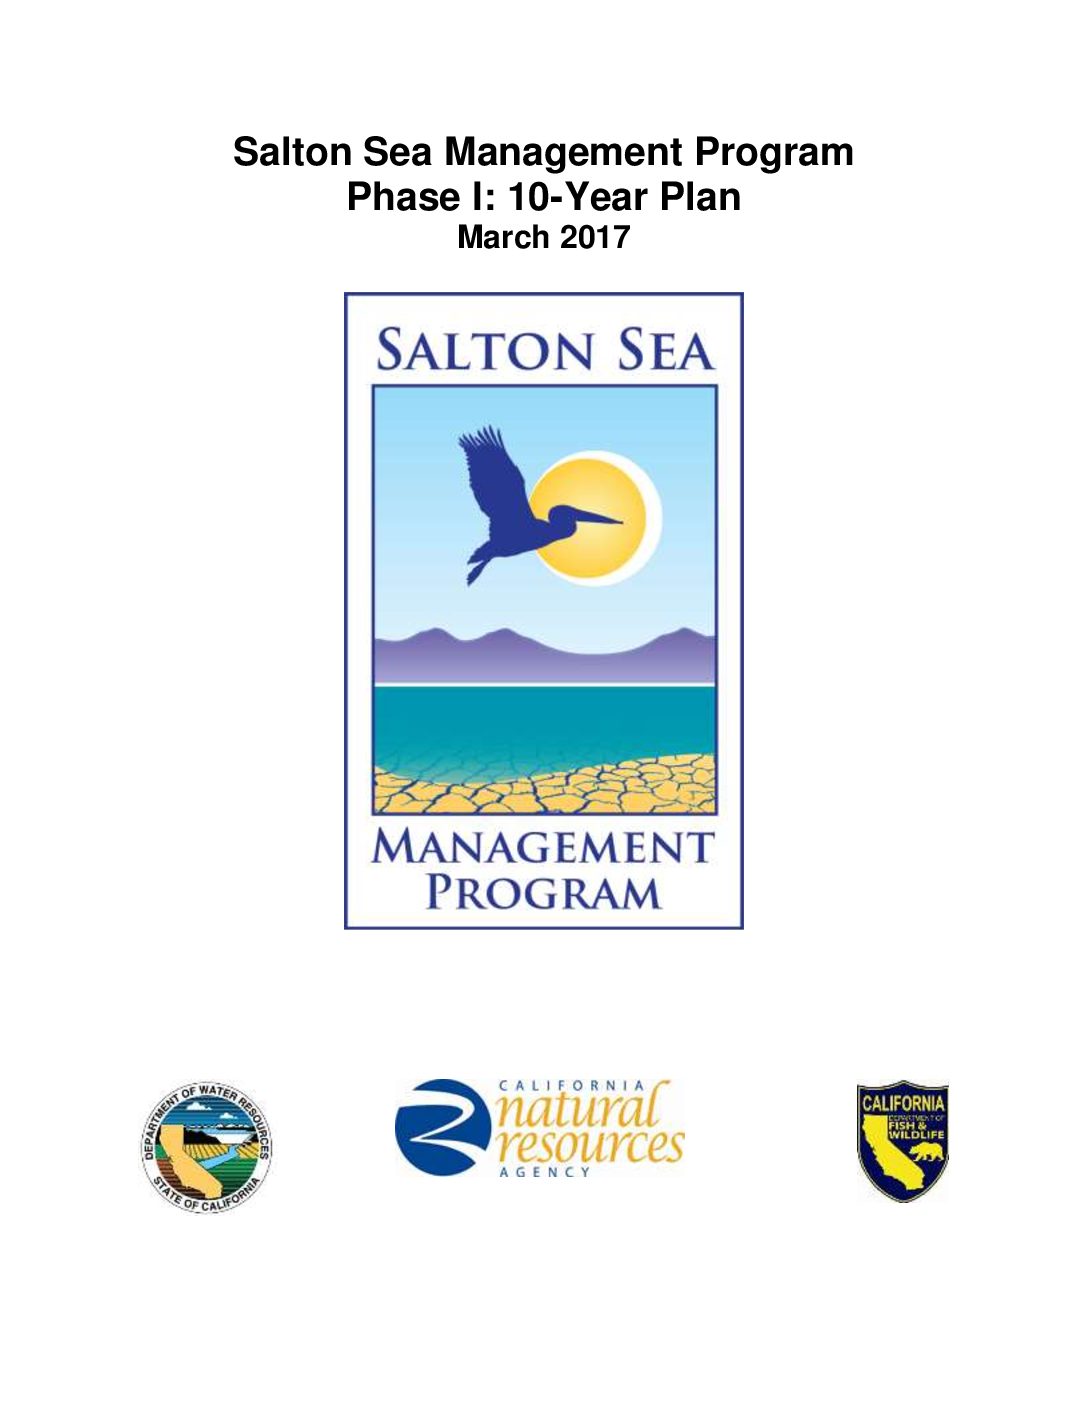 Salton Sea Management Program Phase I: 10-Year Plan